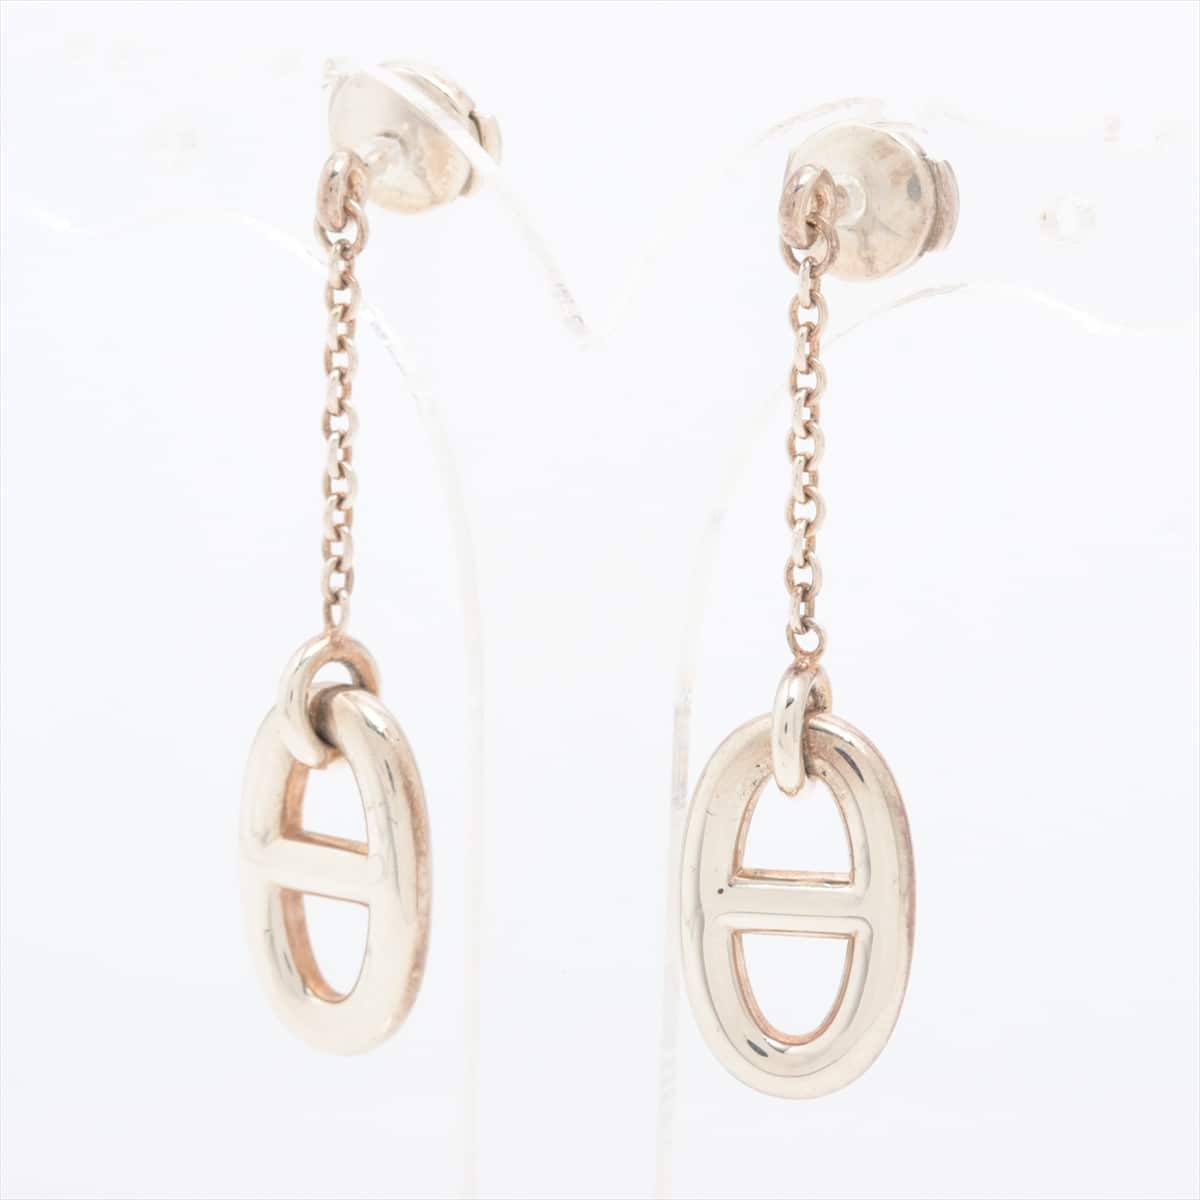 Hermès Chaîne d'Ancre Piercing jewelry (for both ears) 925 6.7g Silver